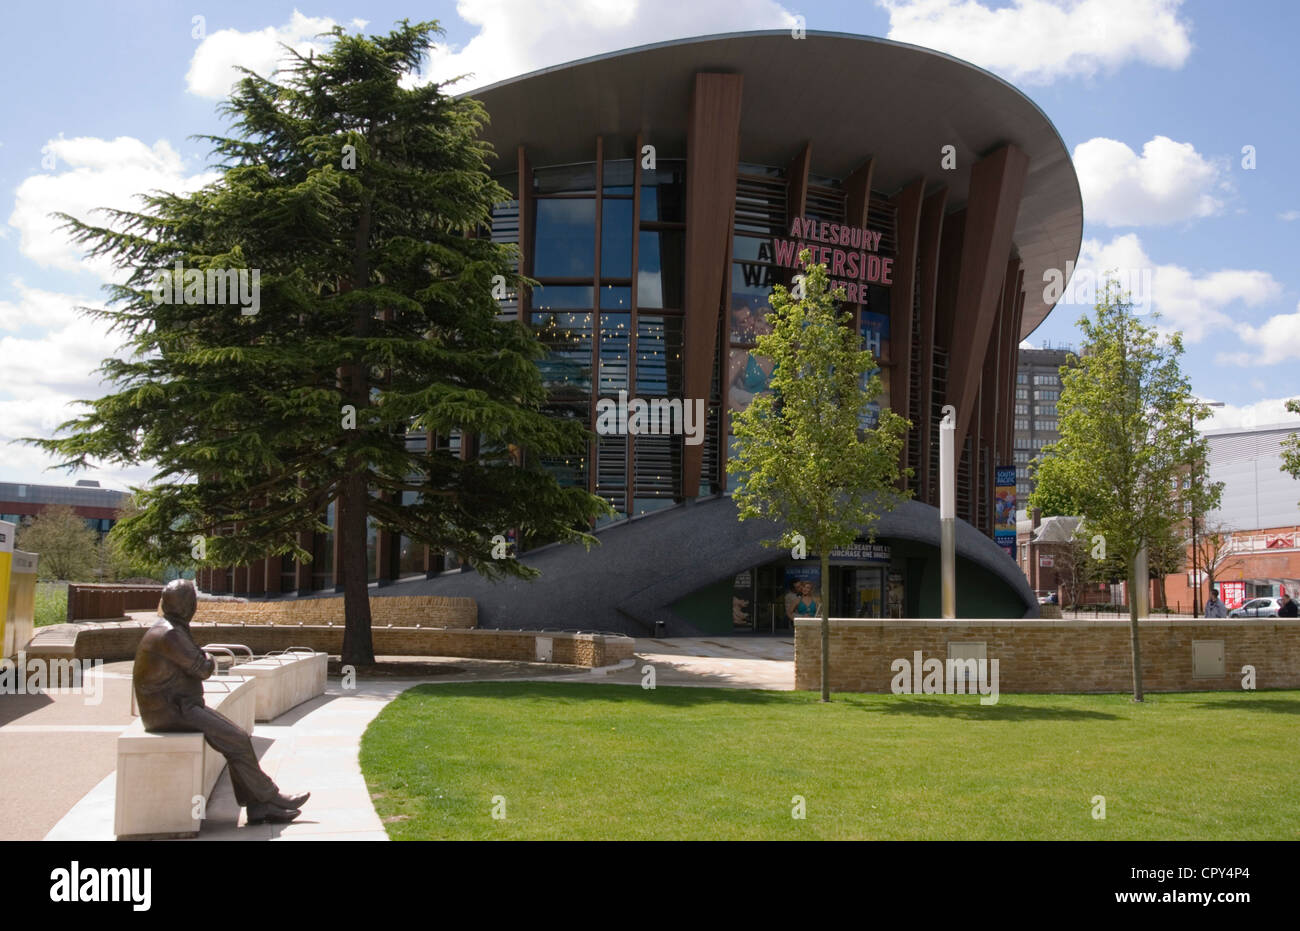 Bucks - Aylesbury - Waterside Theatre - seduto statua Ronnie Barker contemplando questo nuovo edificio moderno Foto Stock